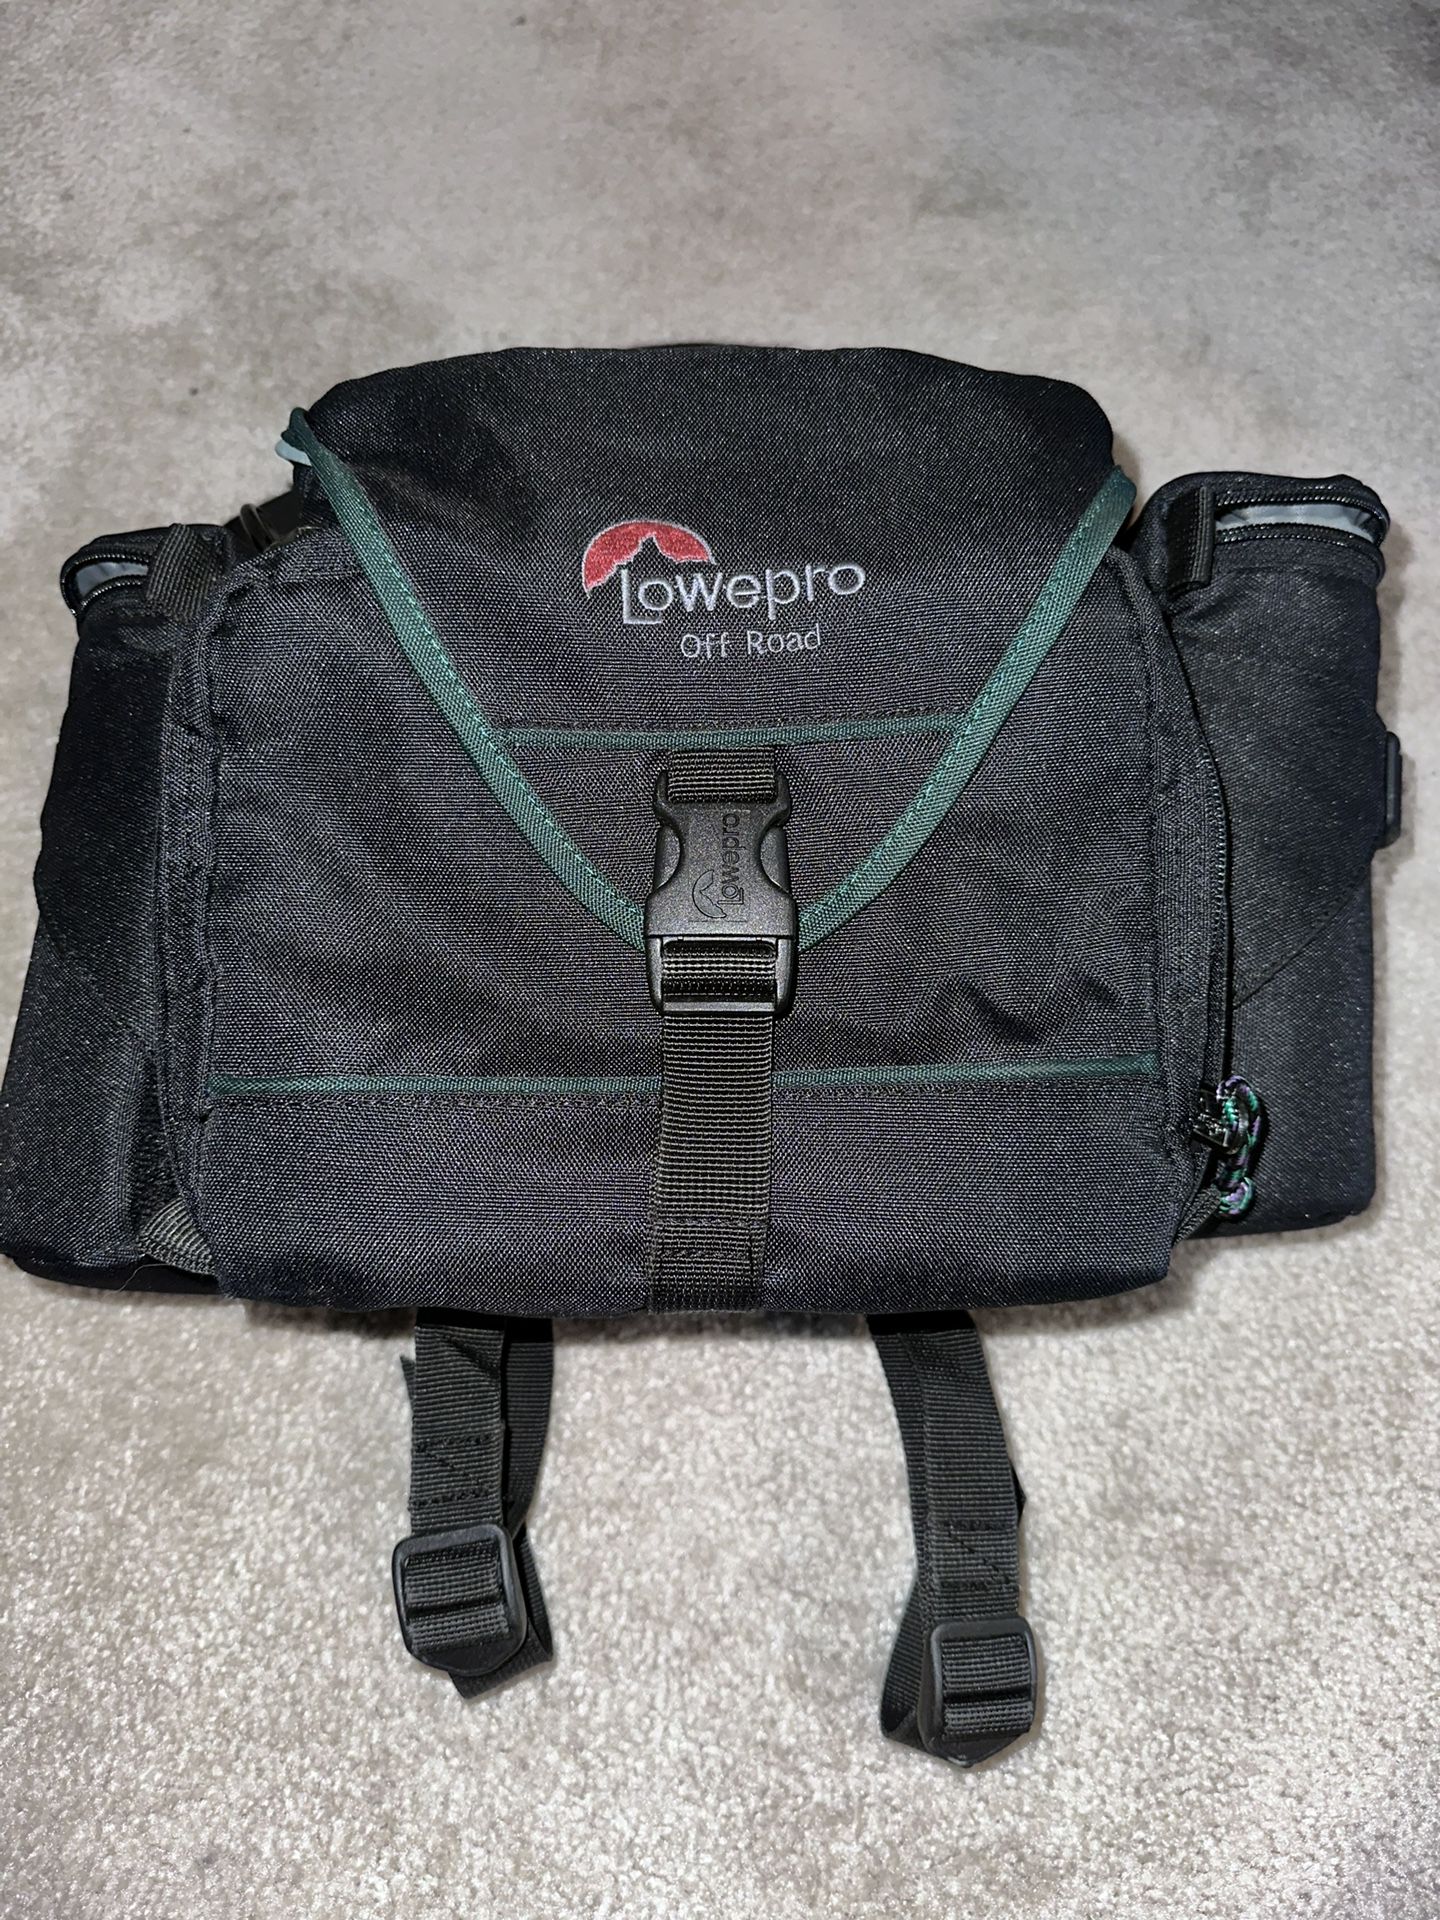 Lowepro Off Road Camera Bag